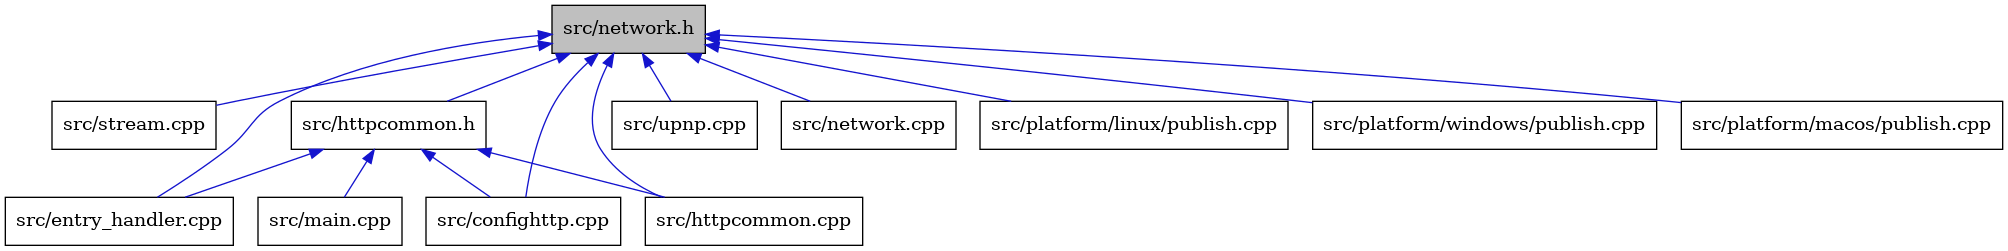 digraph {
    graph [bgcolor="#00000000"]
    node [shape=rectangle style=filled fillcolor="#FFFFFF" font=Helvetica padding=2]
    edge [color="#1414CE"]
    "11" [label="src/stream.cpp" tooltip="src/stream.cpp"]
    "3" [label="src/entry_handler.cpp" tooltip="src/entry_handler.cpp"]
    "1" [label="src/network.h" tooltip="src/network.h" fillcolor="#BFBFBF"]
    "12" [label="src/upnp.cpp" tooltip="src/upnp.cpp"]
    "4" [label="src/httpcommon.h" tooltip="src/httpcommon.h"]
    "7" [label="src/network.cpp" tooltip="src/network.cpp"]
    "6" [label="src/main.cpp" tooltip="src/main.cpp"]
    "8" [label="src/platform/linux/publish.cpp" tooltip="src/platform/linux/publish.cpp"]
    "2" [label="src/confighttp.cpp" tooltip="src/confighttp.cpp"]
    "10" [label="src/platform/windows/publish.cpp" tooltip="src/platform/windows/publish.cpp"]
    "9" [label="src/platform/macos/publish.cpp" tooltip="src/platform/macos/publish.cpp"]
    "5" [label="src/httpcommon.cpp" tooltip="src/httpcommon.cpp"]
    "1" -> "2" [dir=back tooltip="include"]
    "1" -> "3" [dir=back tooltip="include"]
    "1" -> "4" [dir=back tooltip="include"]
    "1" -> "5" [dir=back tooltip="include"]
    "1" -> "7" [dir=back tooltip="include"]
    "1" -> "8" [dir=back tooltip="include"]
    "1" -> "9" [dir=back tooltip="include"]
    "1" -> "10" [dir=back tooltip="include"]
    "1" -> "11" [dir=back tooltip="include"]
    "1" -> "12" [dir=back tooltip="include"]
    "4" -> "2" [dir=back tooltip="include"]
    "4" -> "3" [dir=back tooltip="include"]
    "4" -> "5" [dir=back tooltip="include"]
    "4" -> "6" [dir=back tooltip="include"]
}